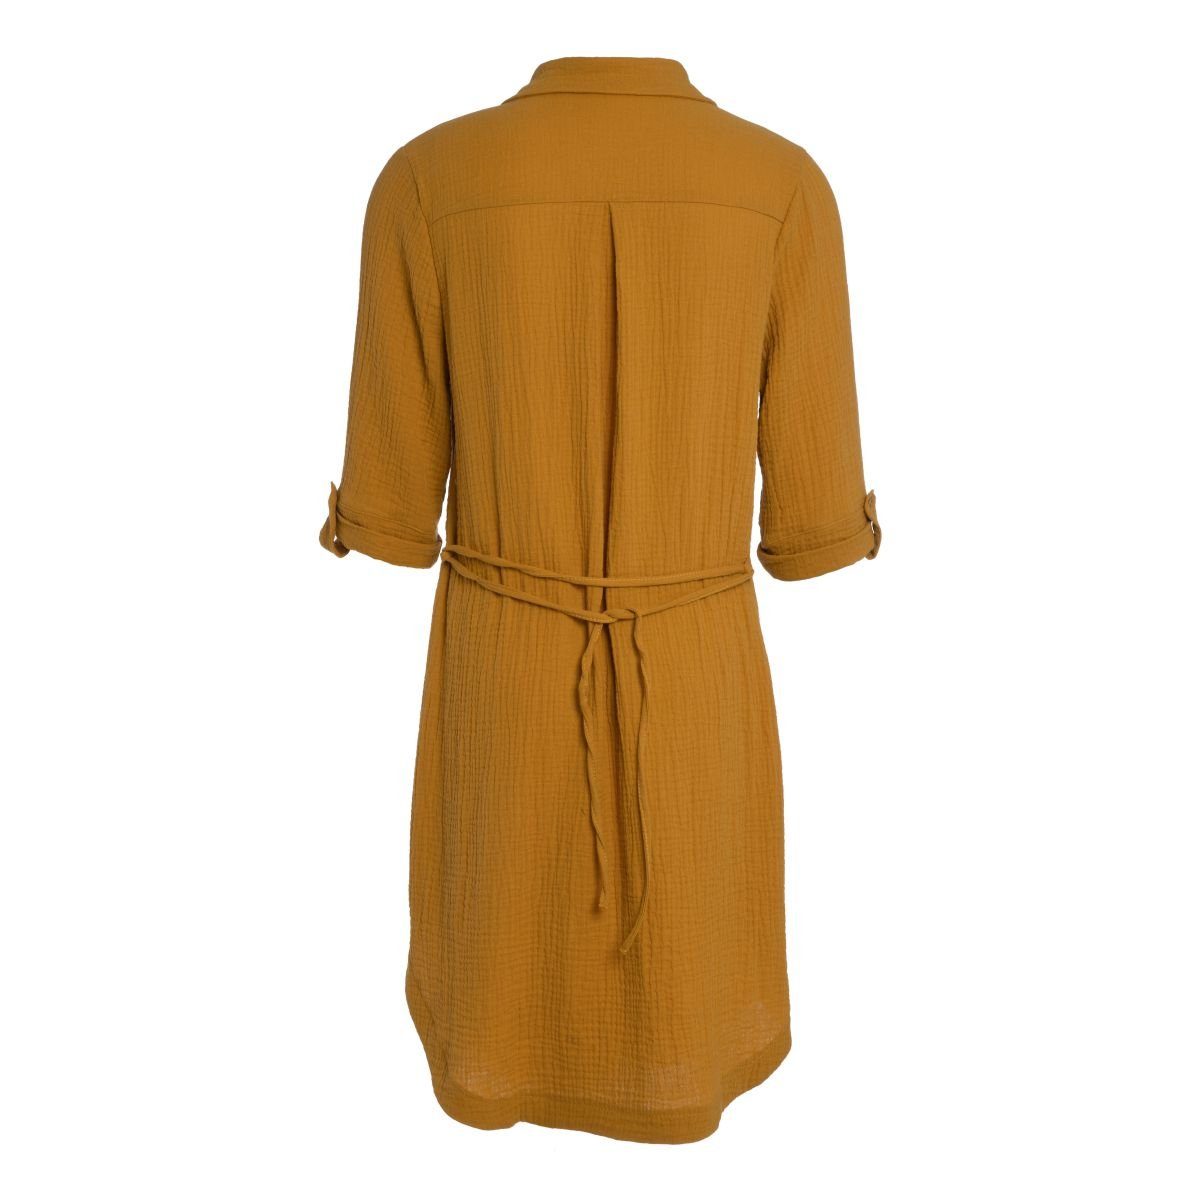 Factory Strickkleid Gelb Glatt Knit Kleid Kleid Kleider Strickkleid Kim Sommer XL